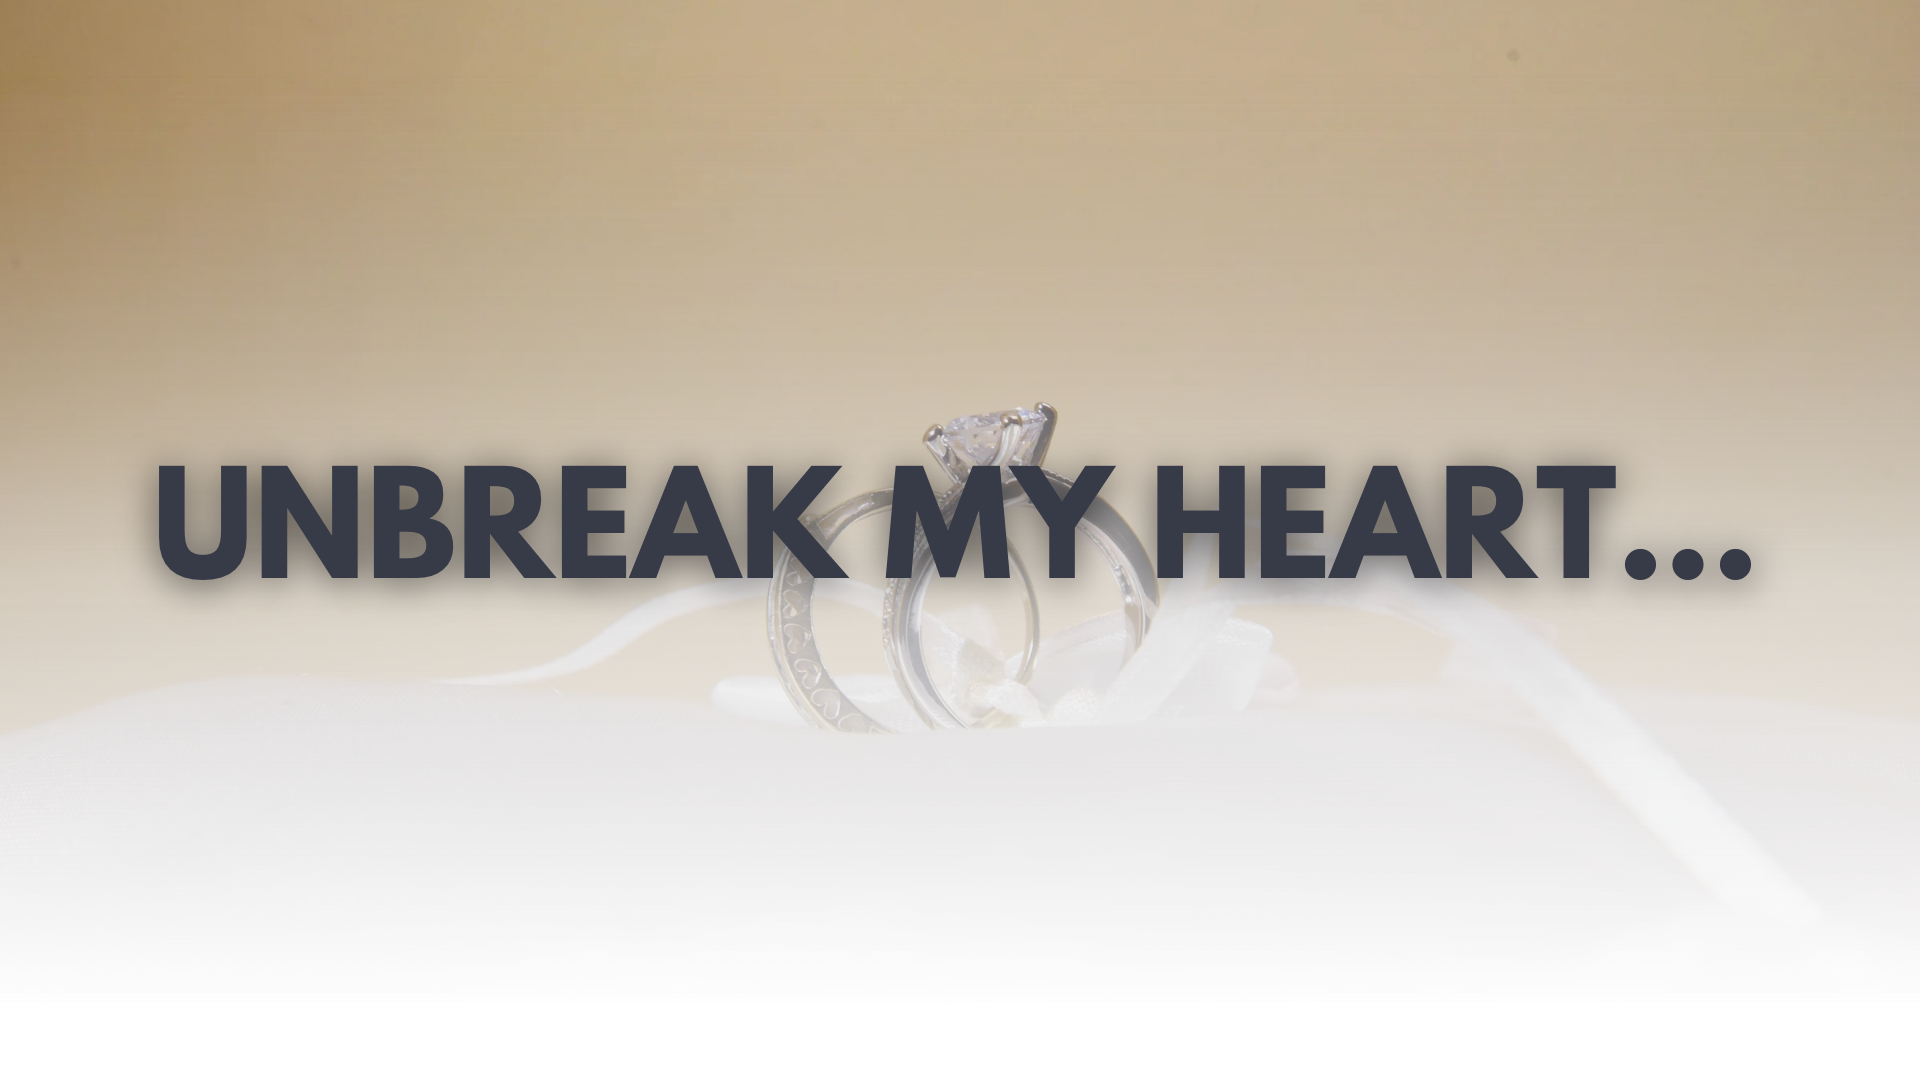 Unbreak my heart…